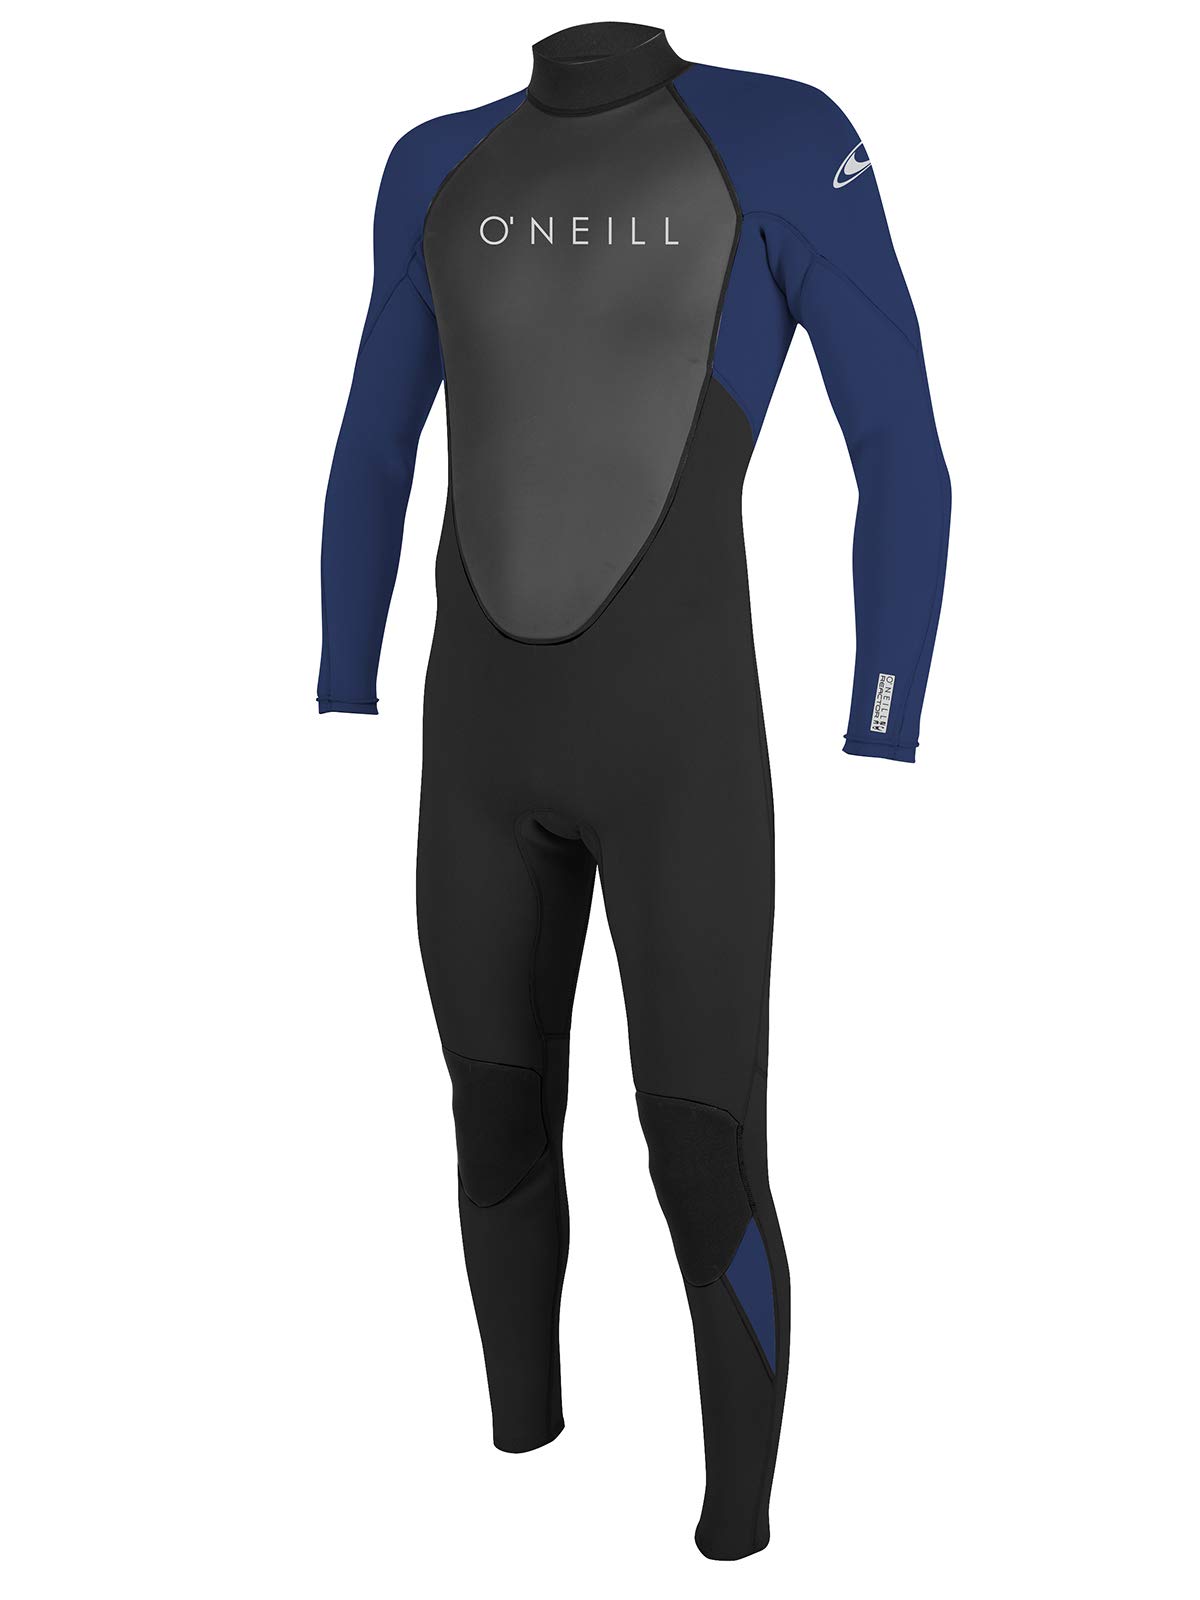 O'Neill Wetsuits Мужской гидрокостюм O'Neill Reactor II с молнией сзади 3/2 мм